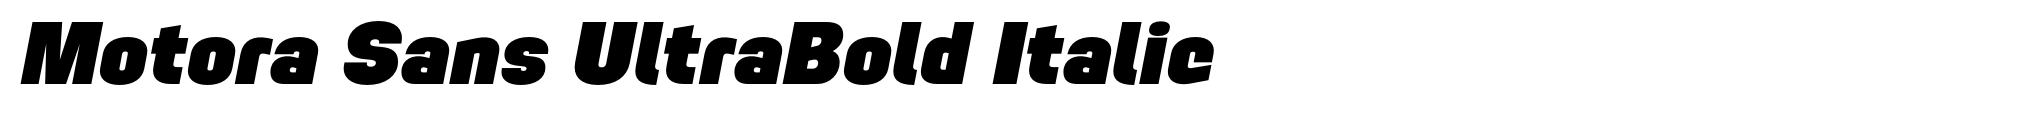 Motora Sans UltraBold Italic image